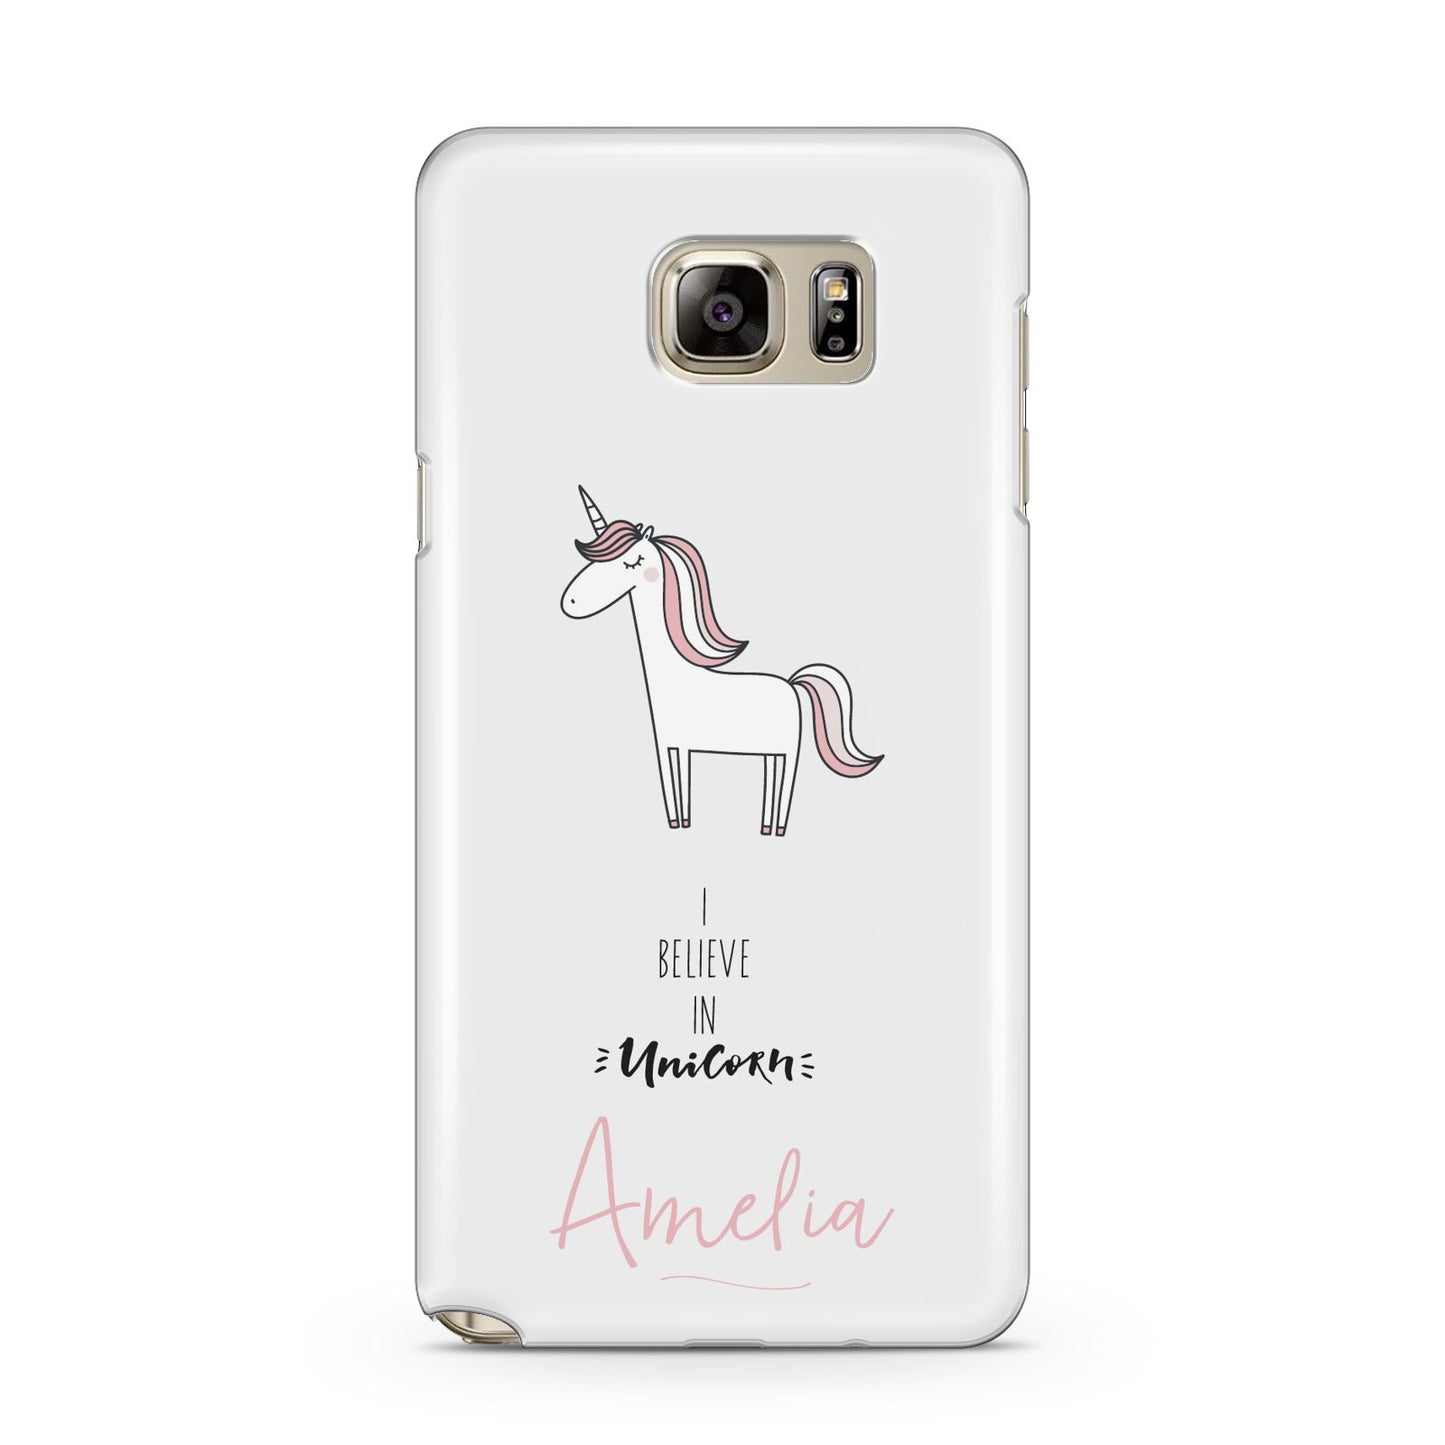 I Believe in Unicorn Samsung Galaxy Note 5 Case